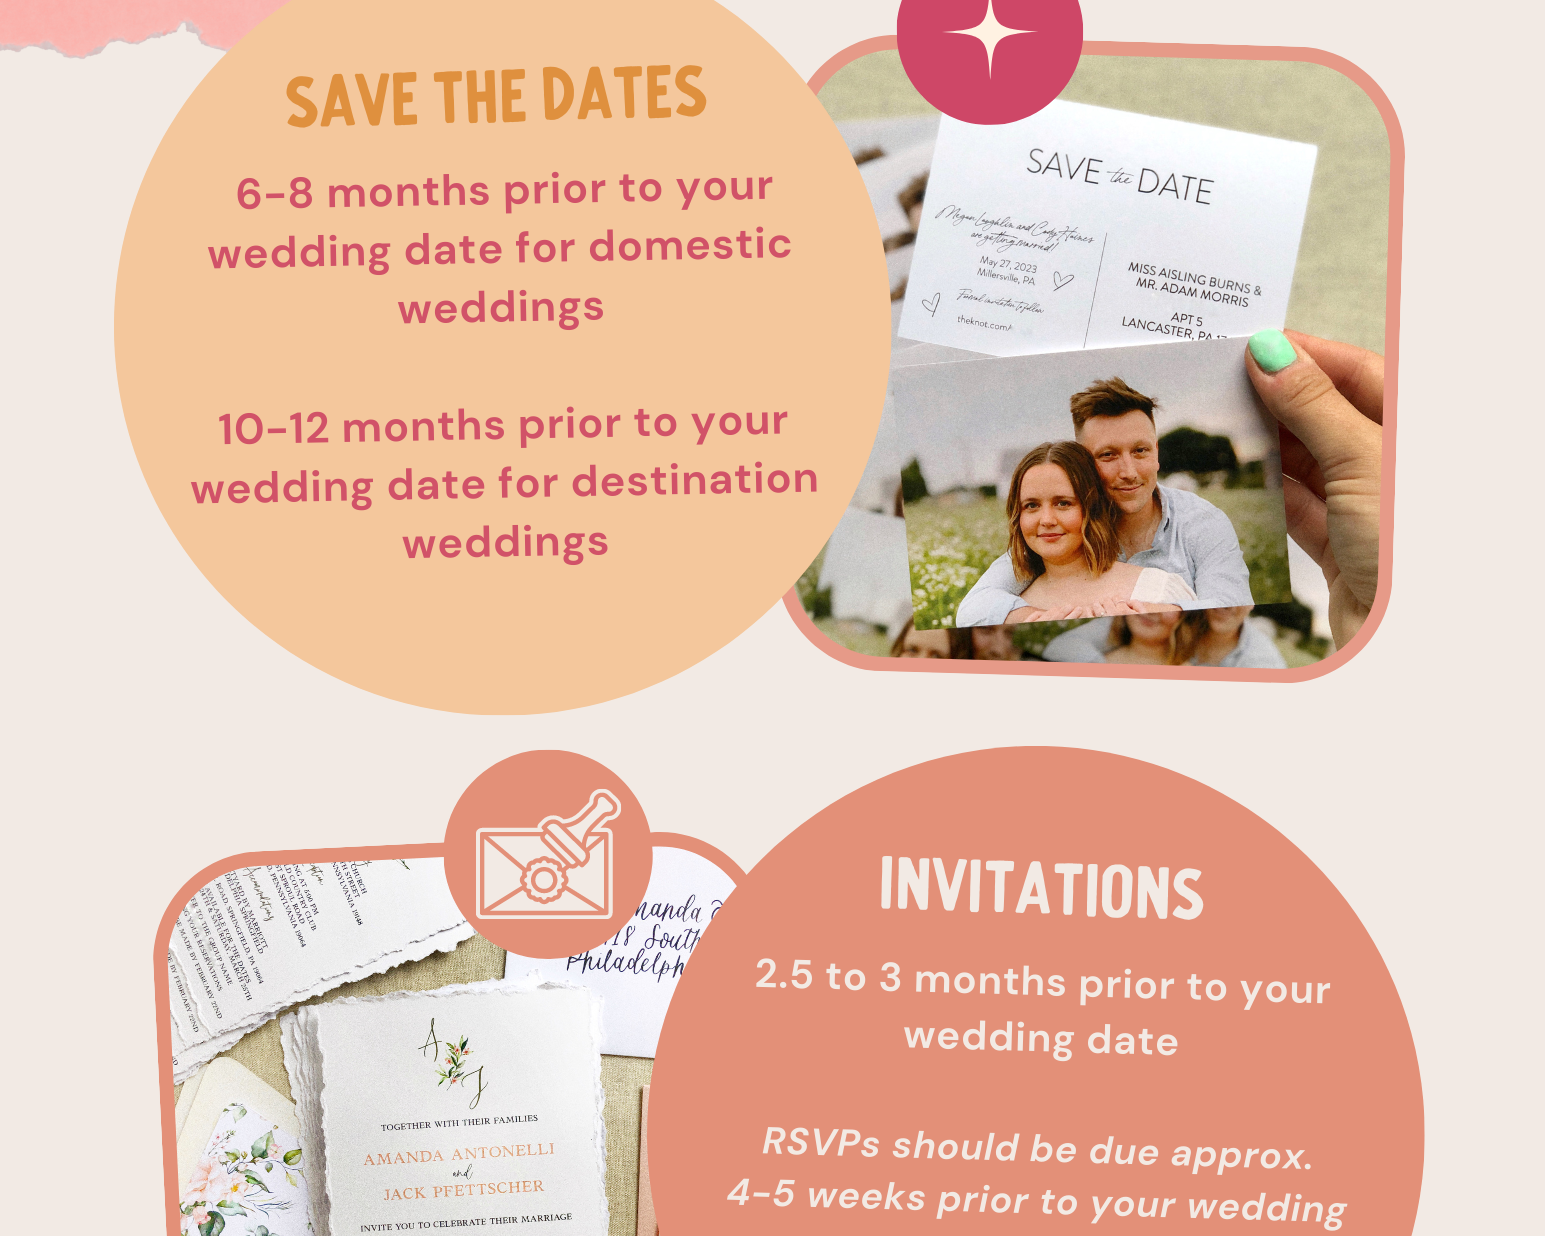 When Should I Send Wedding Invitations?